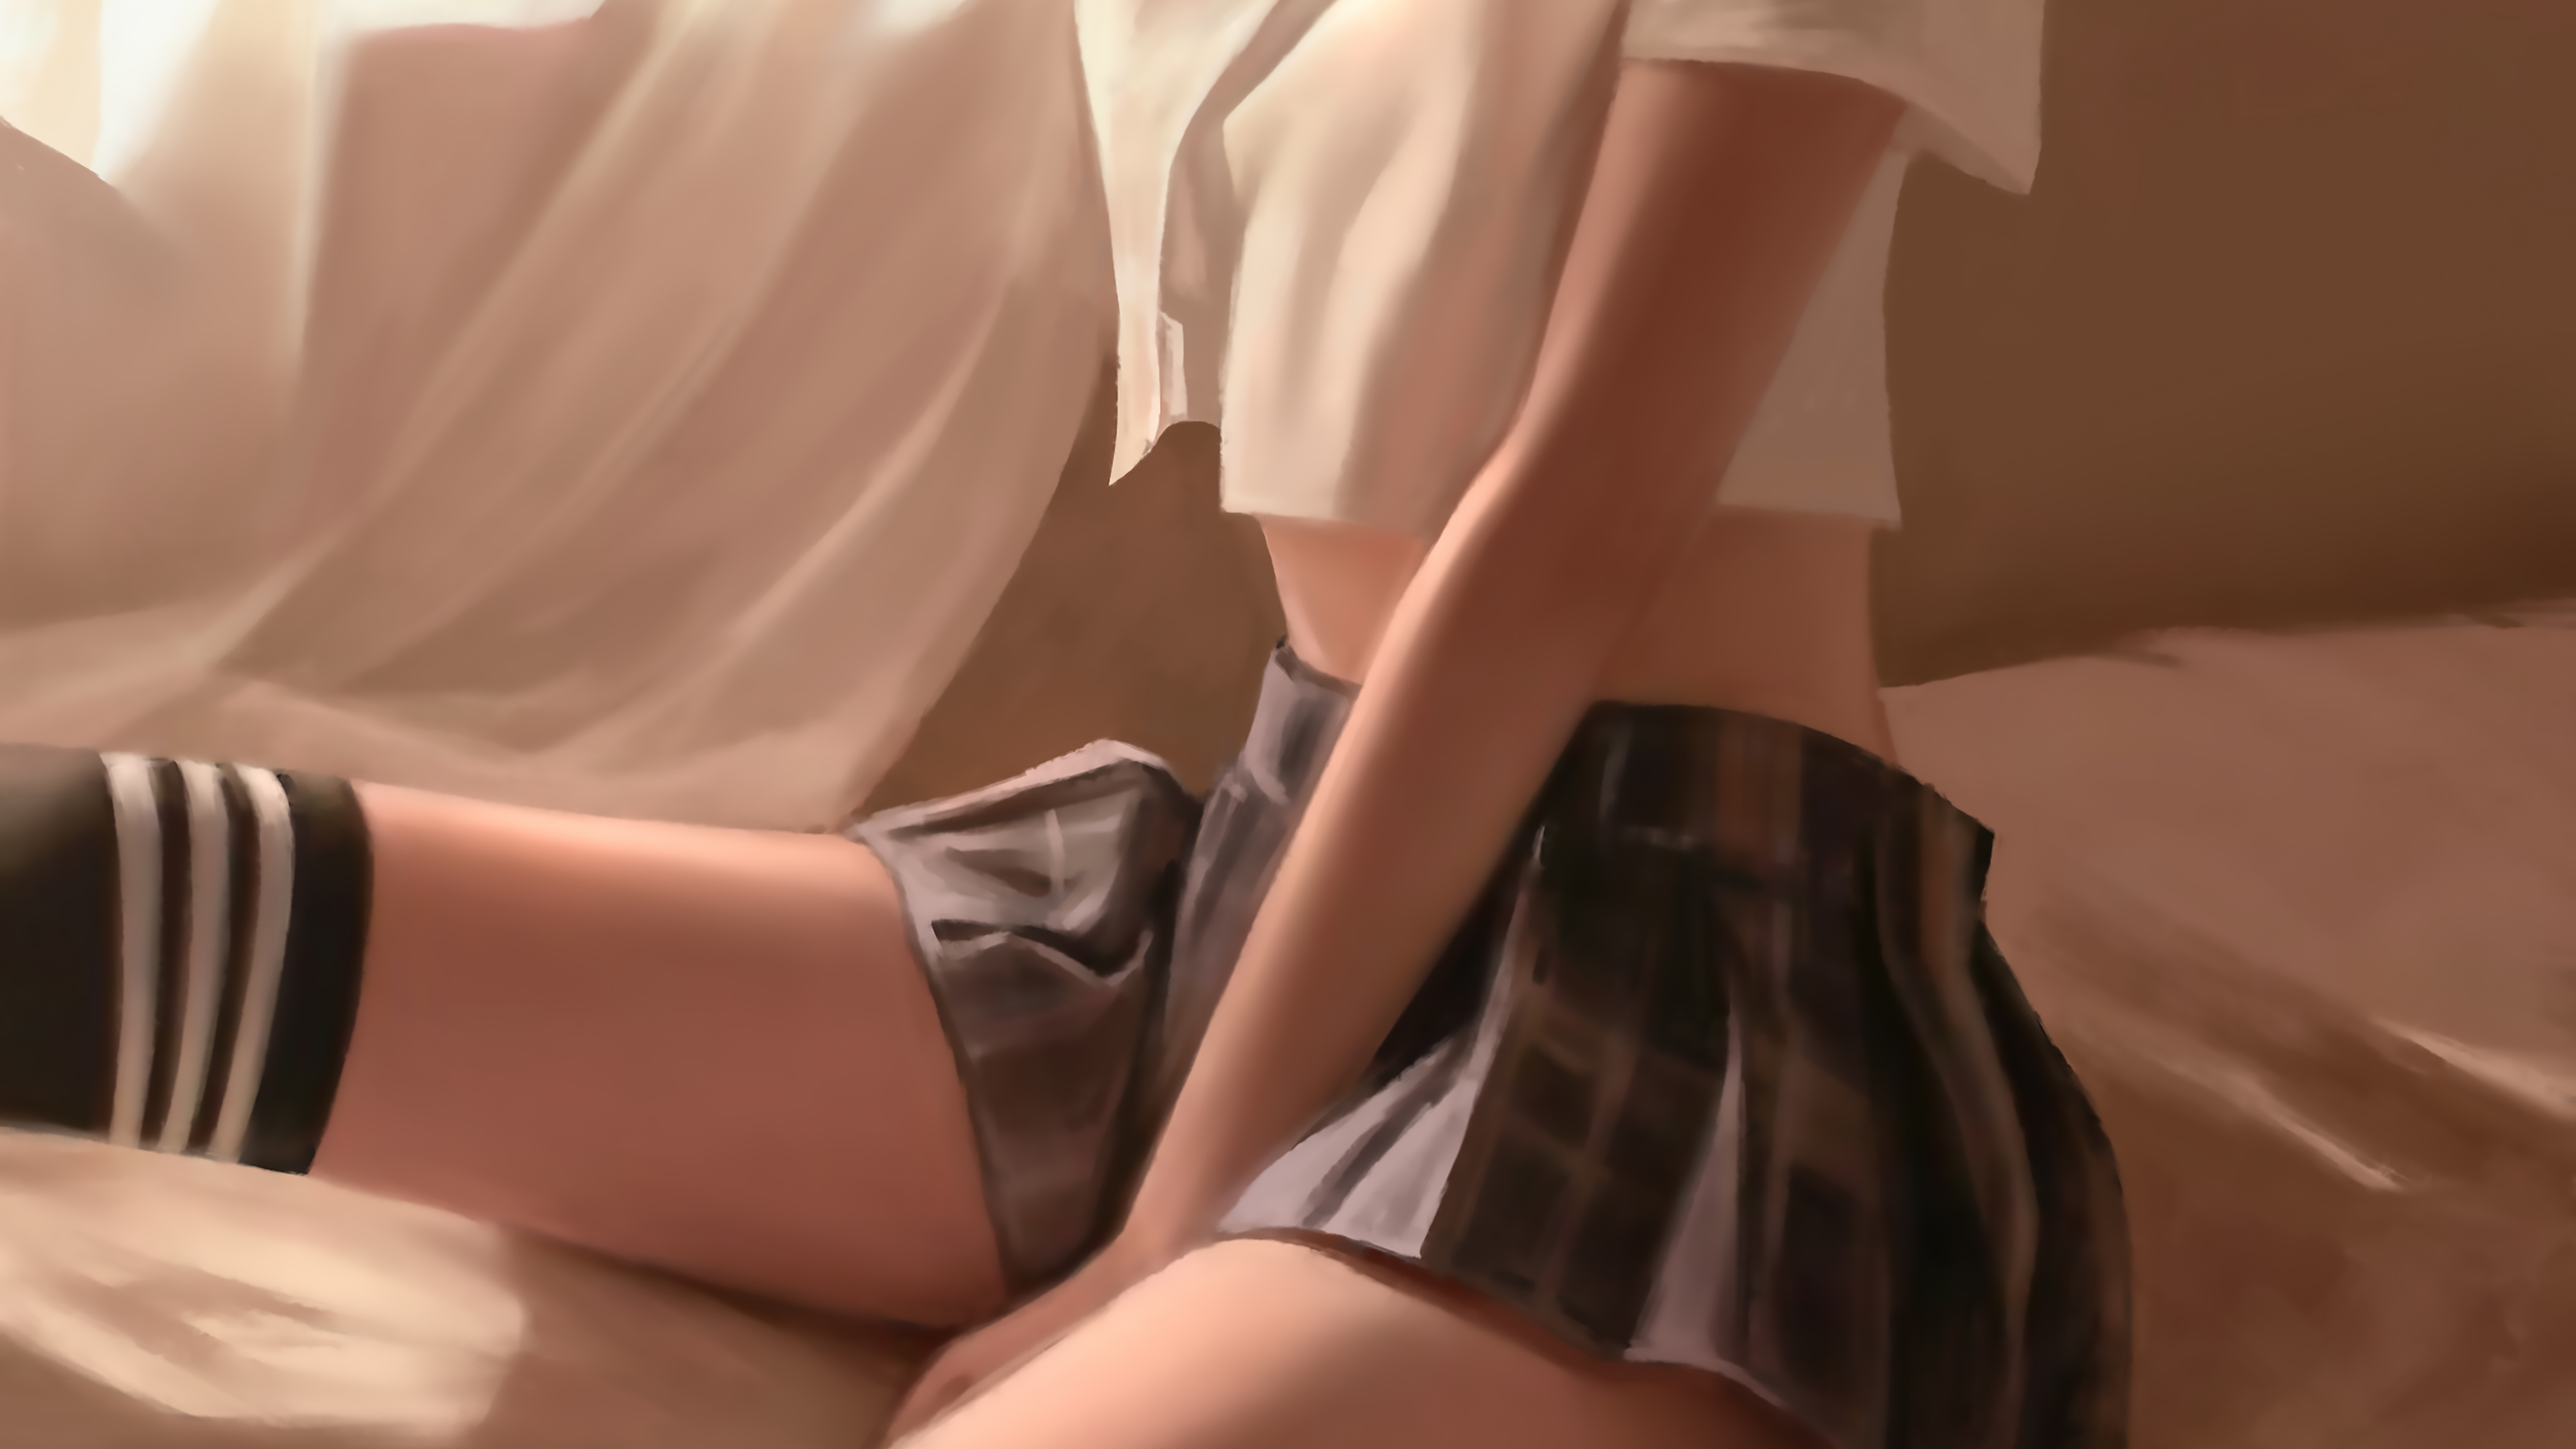 Schoolgirl School Uniform Skirt Digital Art Blurred 3840x2160